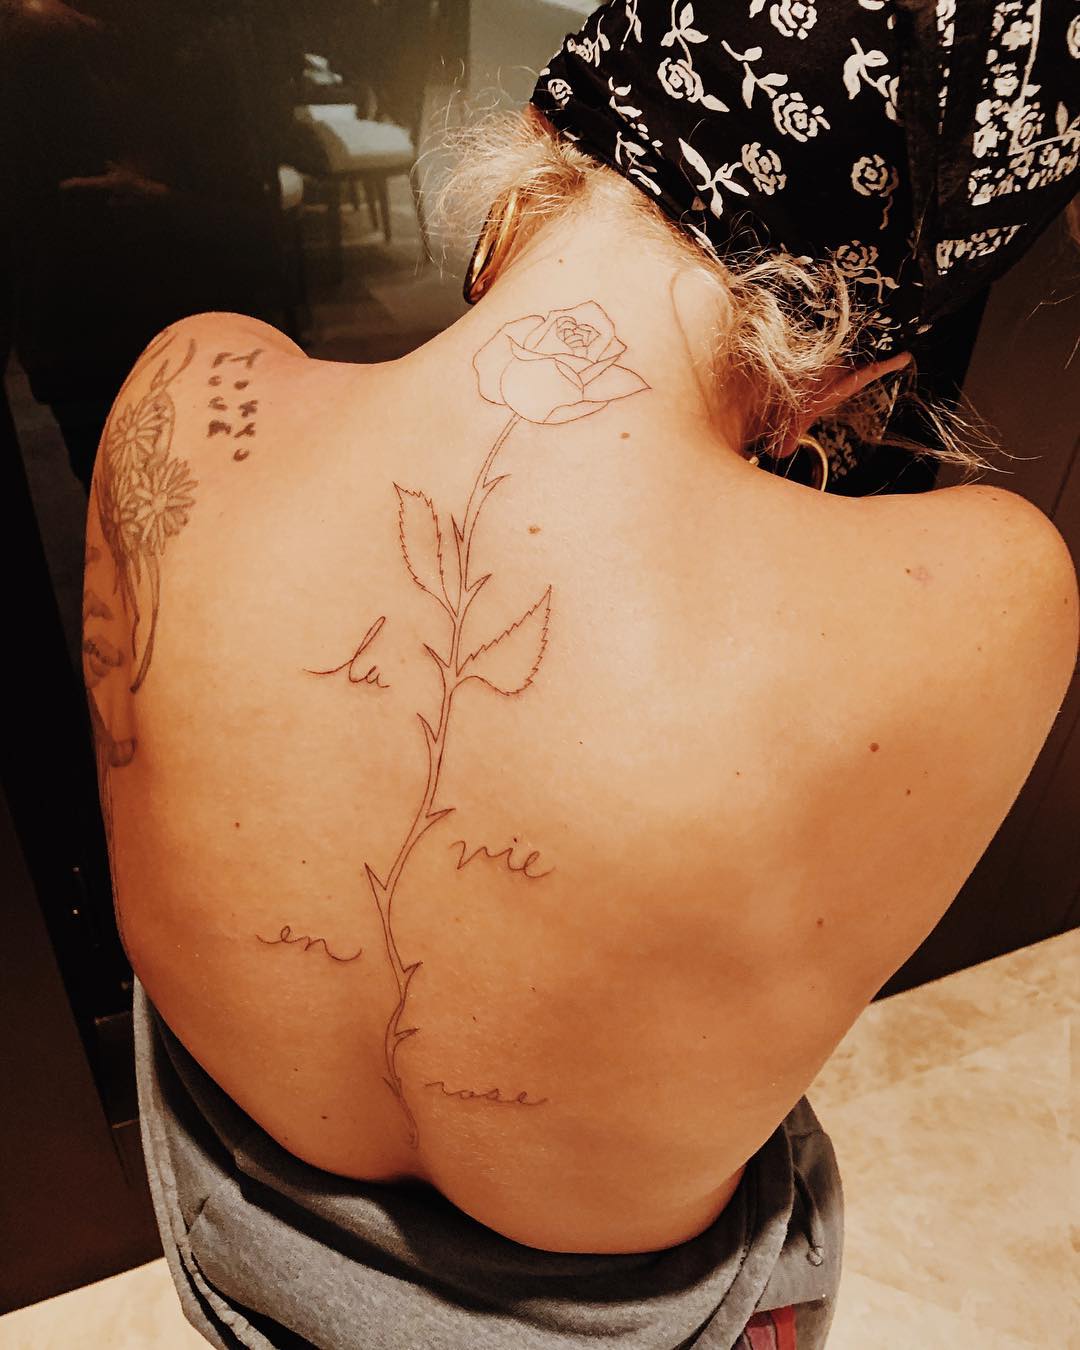 Lady Gaga tatuaggio schiena ph @ladygaga